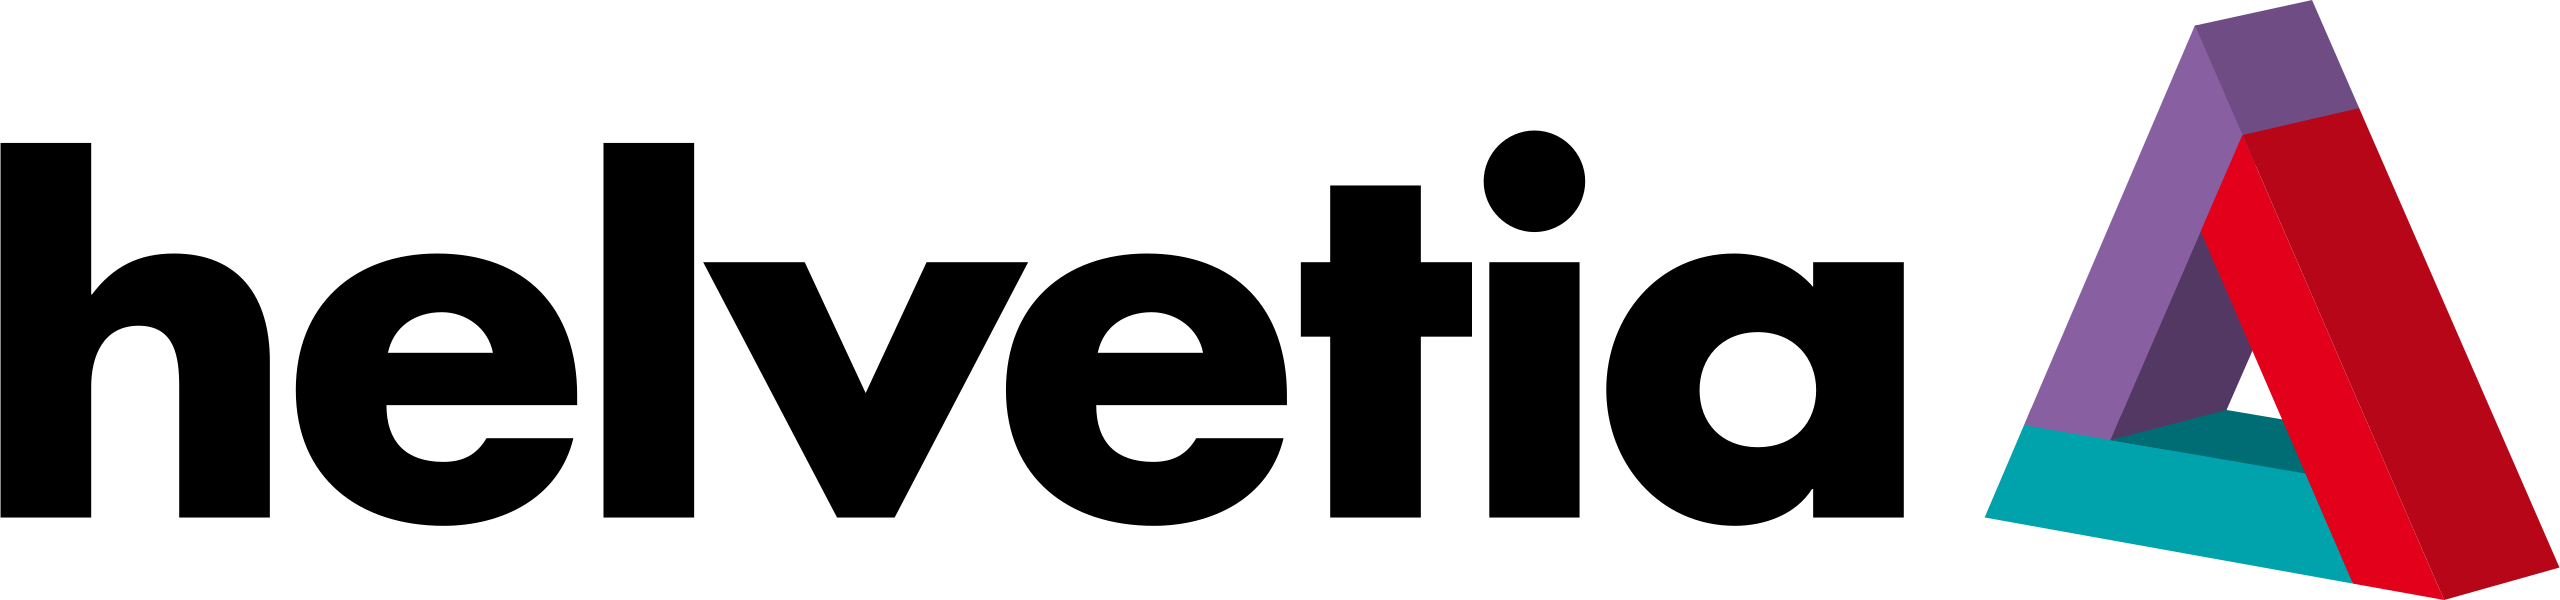 2560px-Helvetia_(Versicherung)_logo.svg